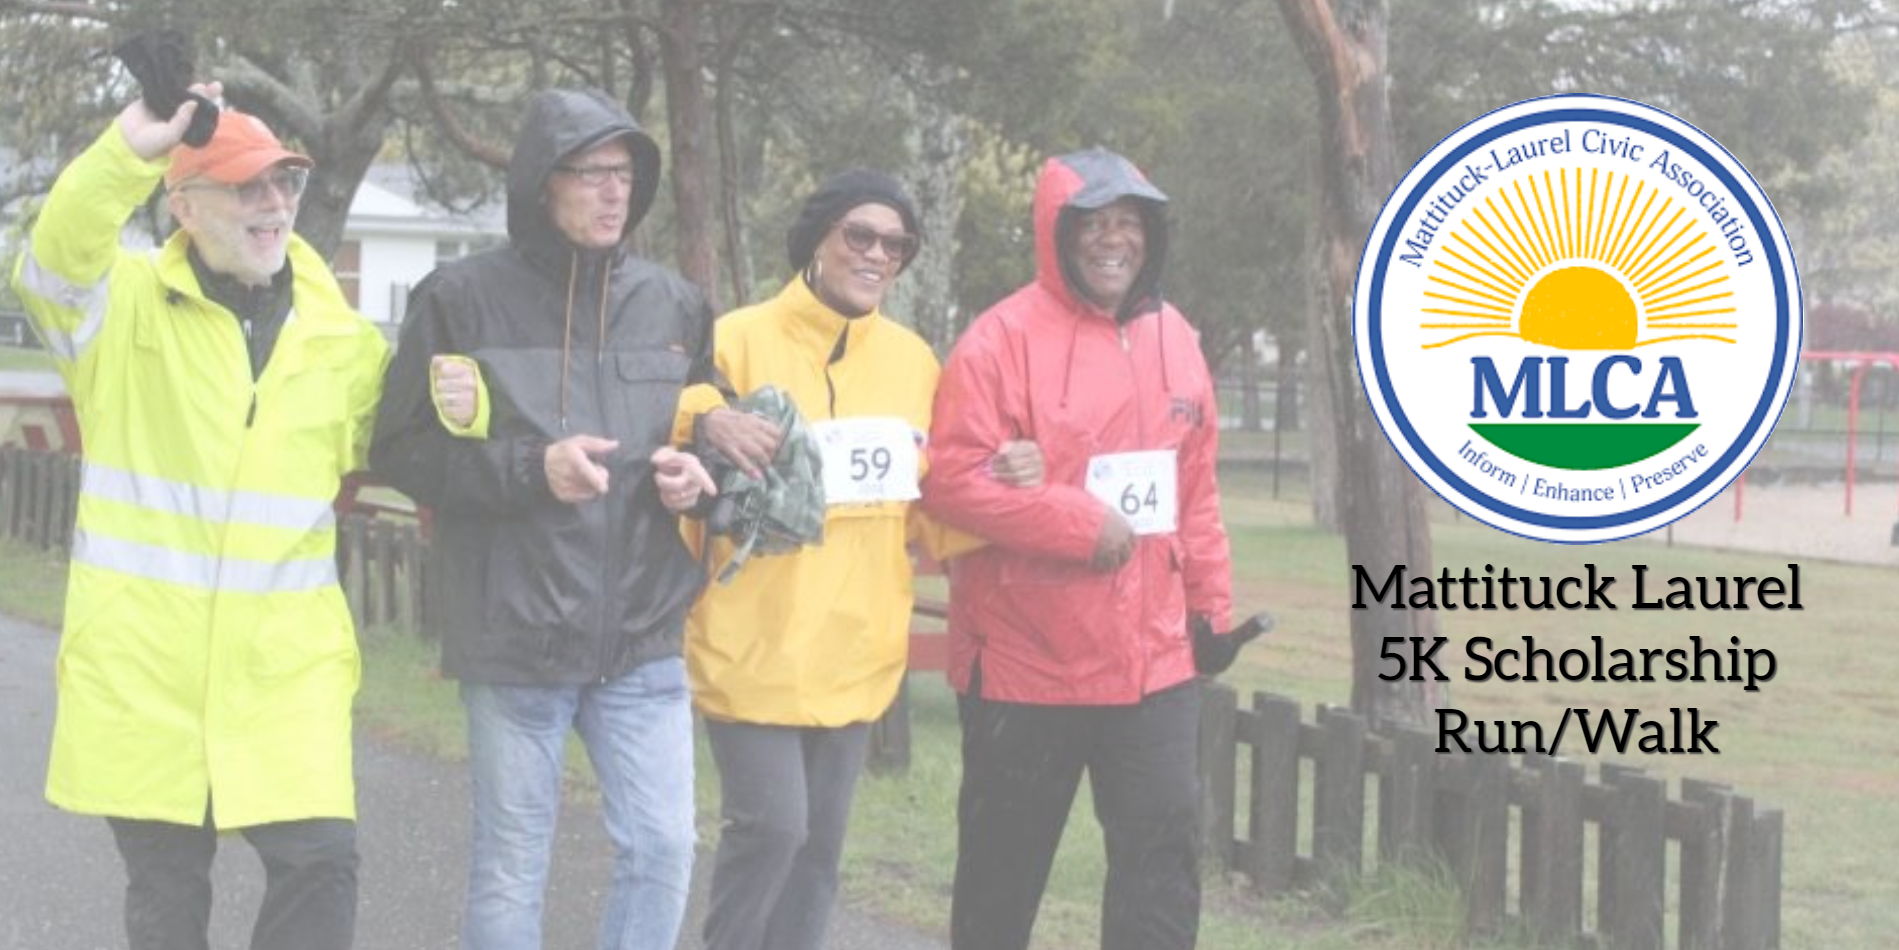 Mattituck Laurel 5K Scholarship Run/Walk promotional image